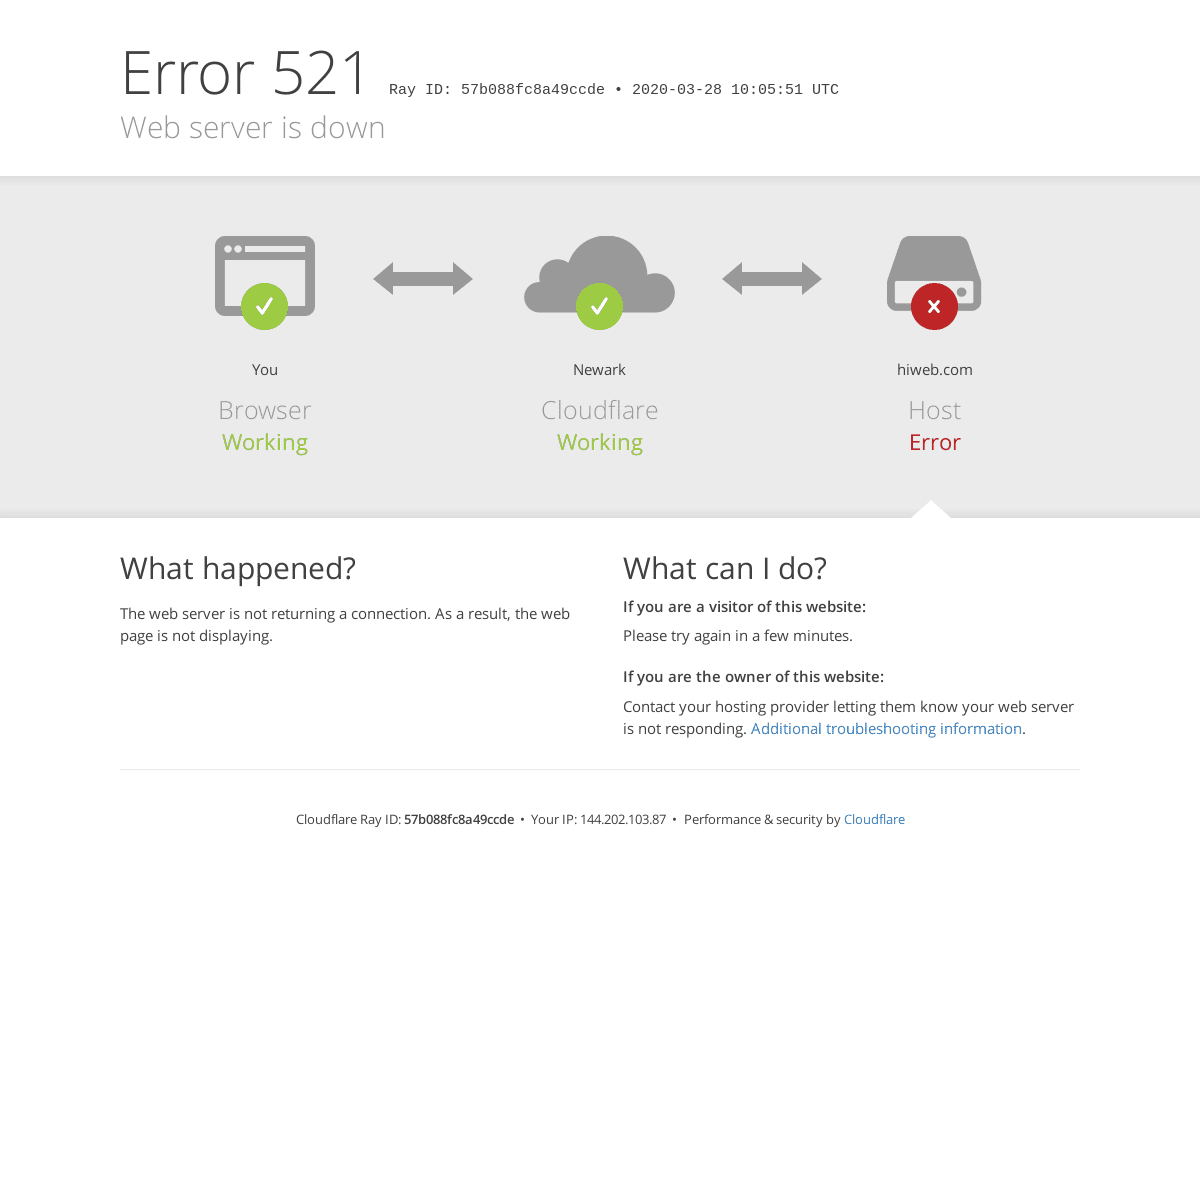 A complete backup of hiweb.com